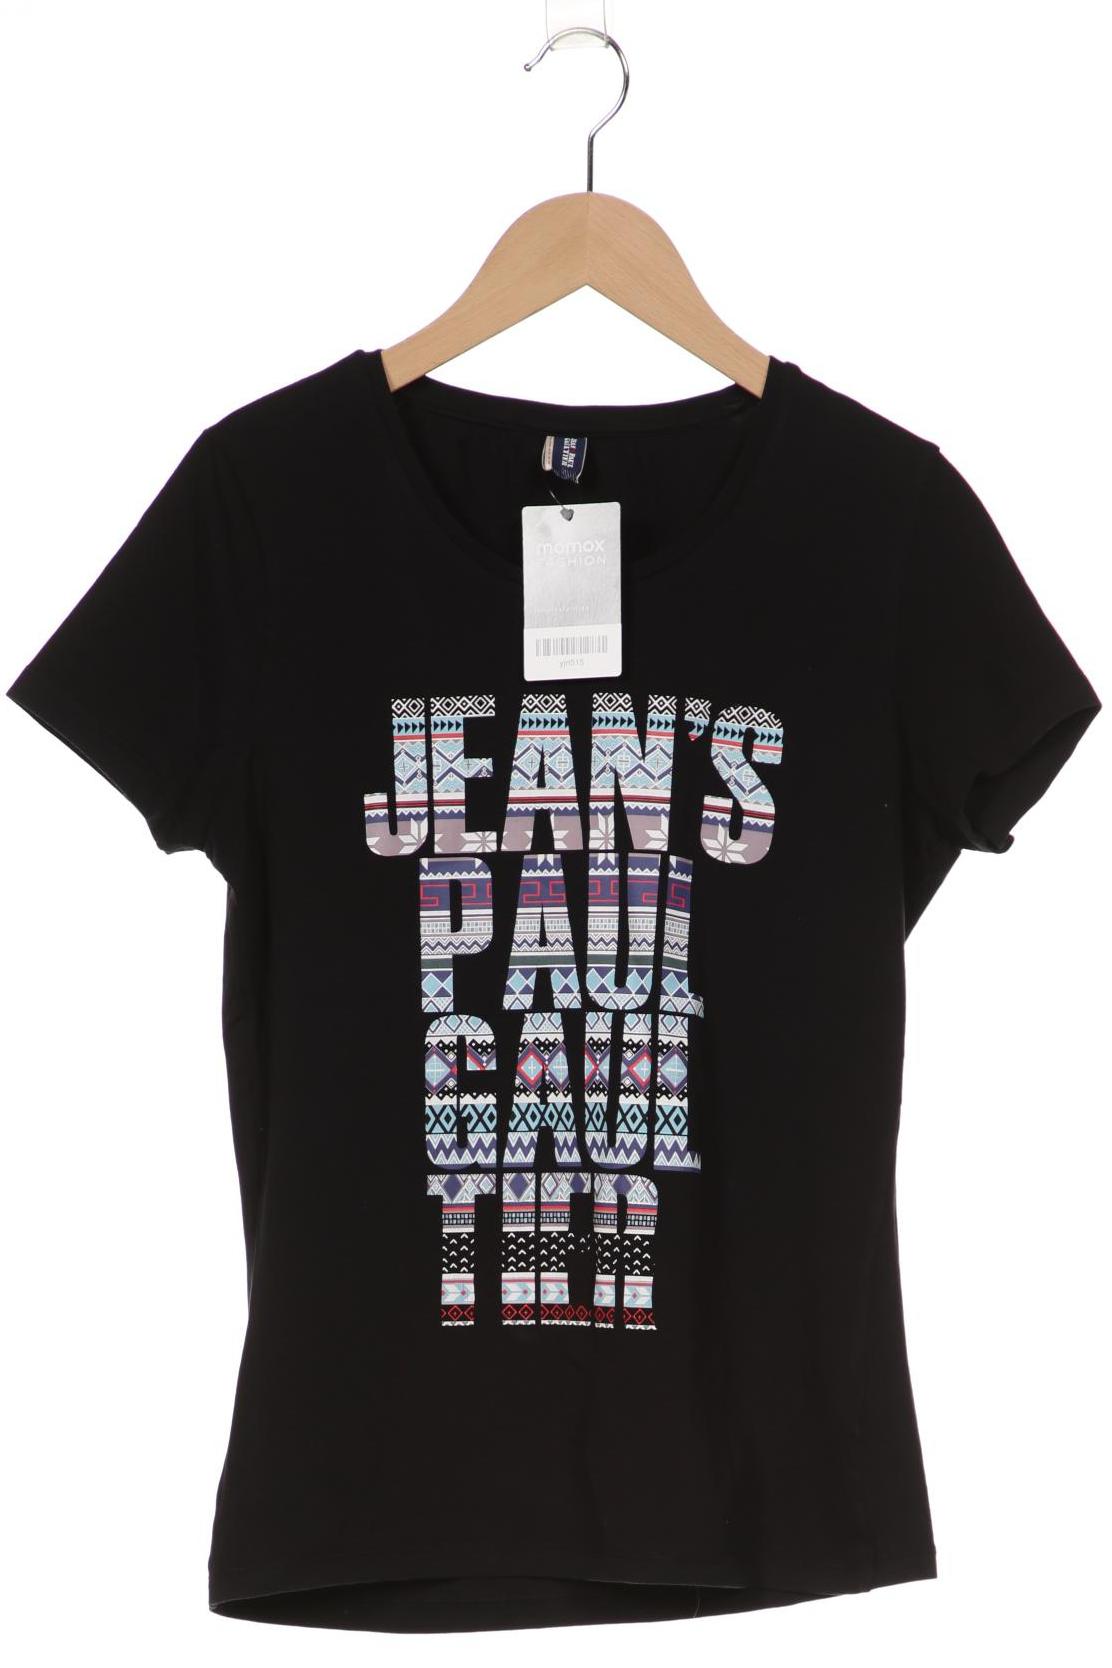 Jean Paul Gaultier Damen T-Shirt, schwarz von Jean Paul Gaultier